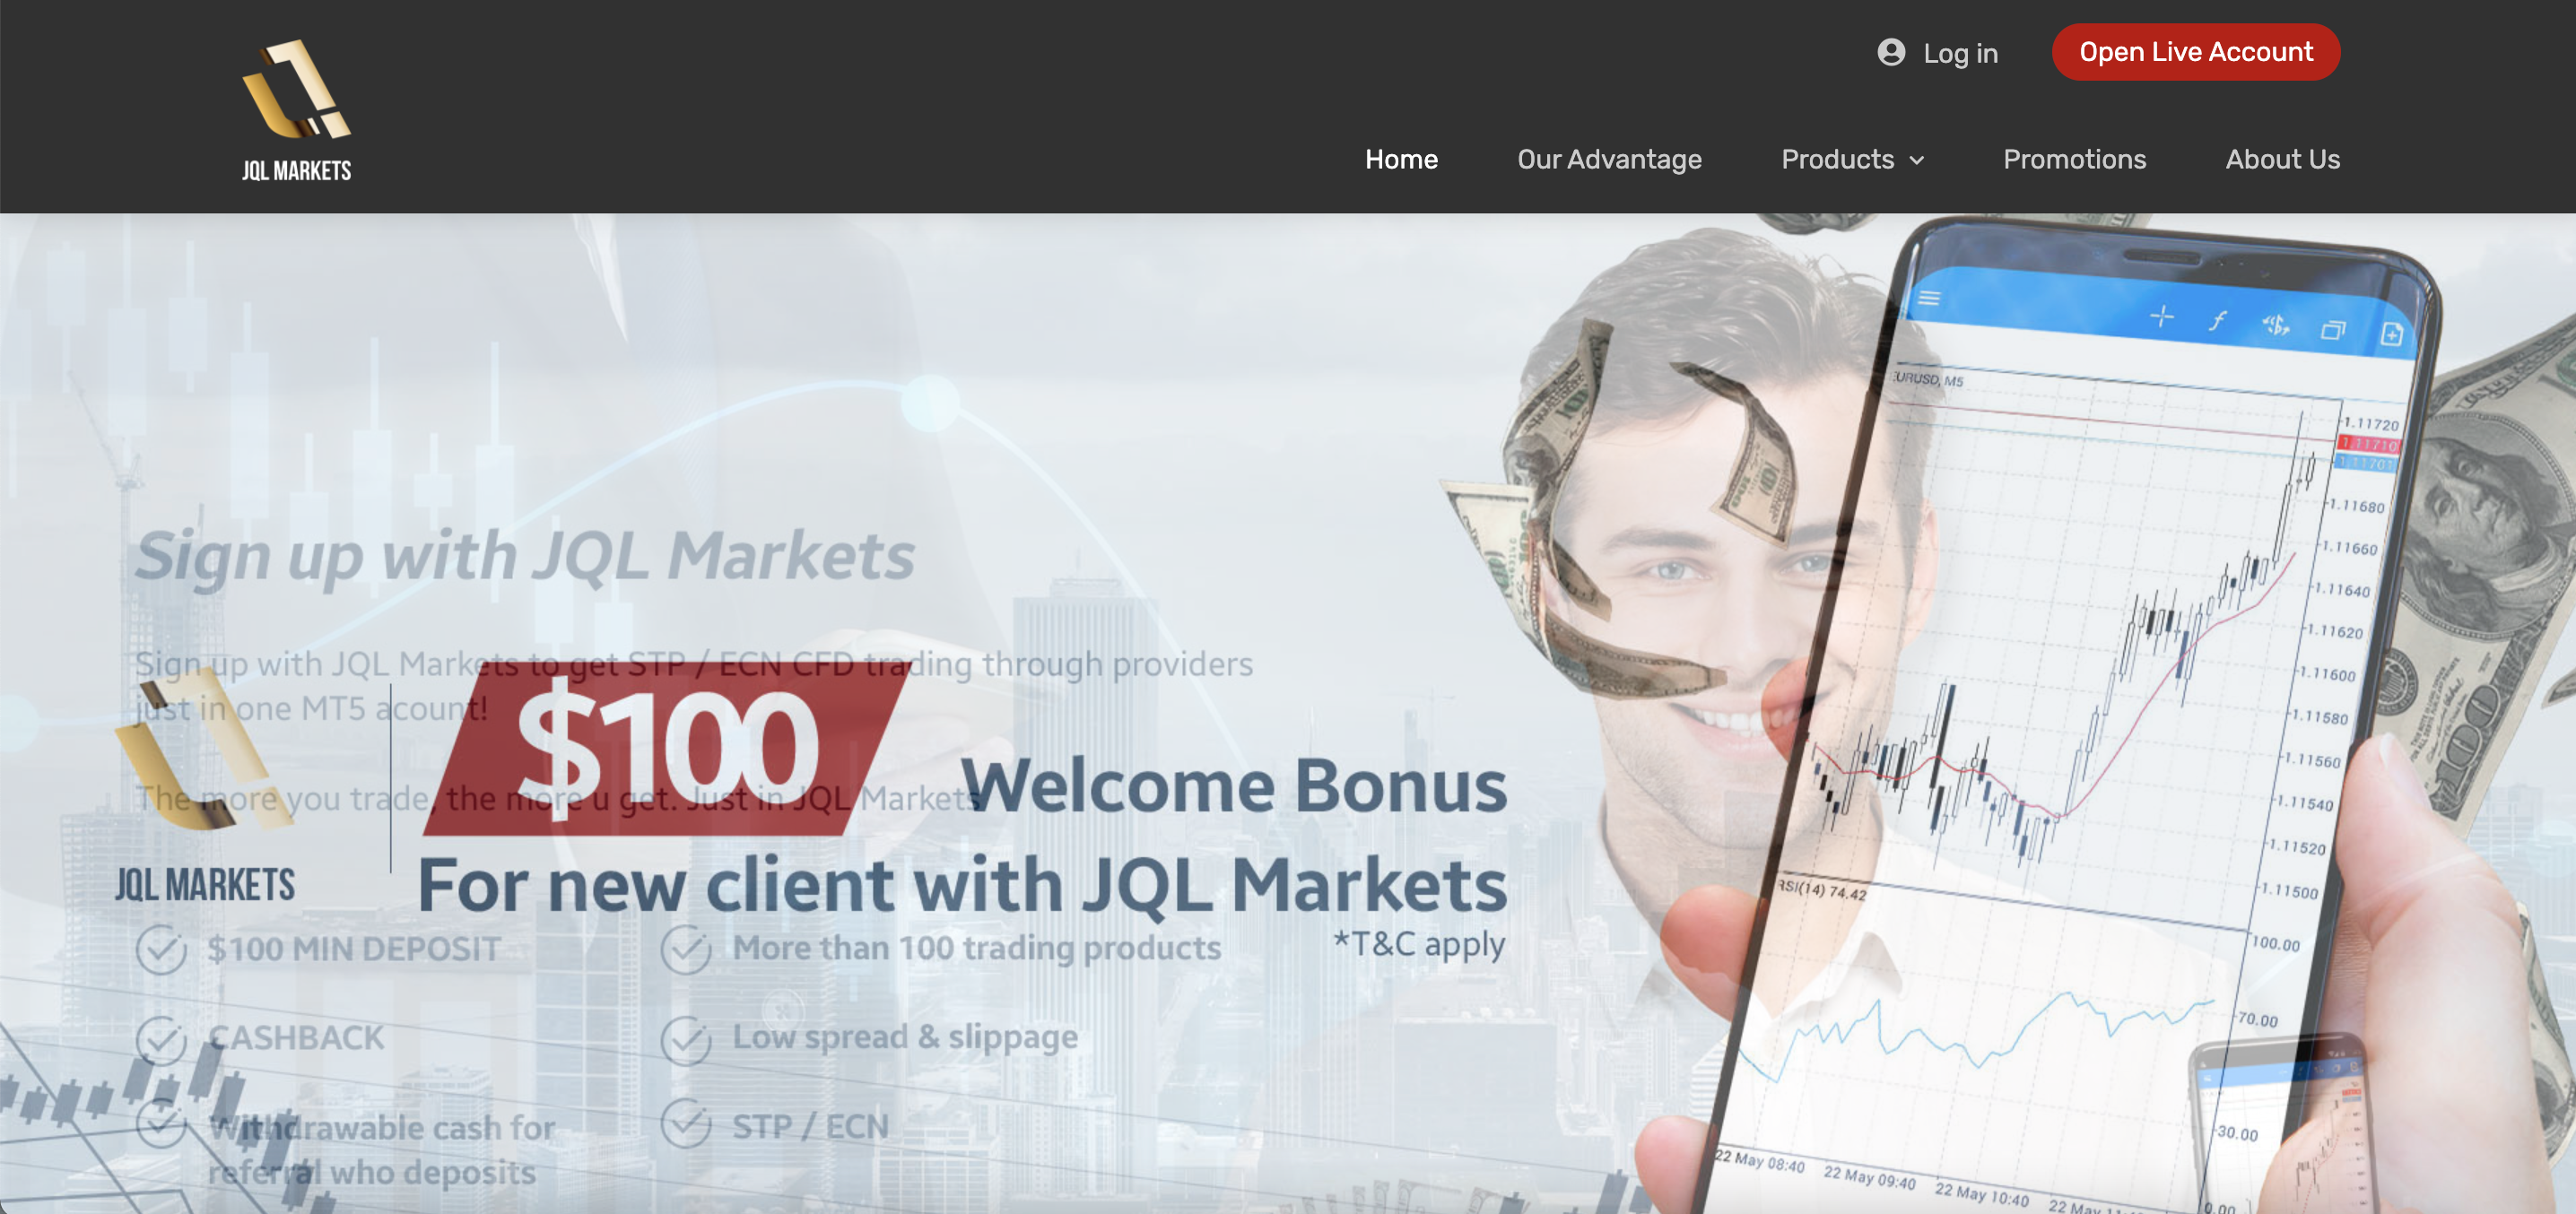 JQL MARKETS website